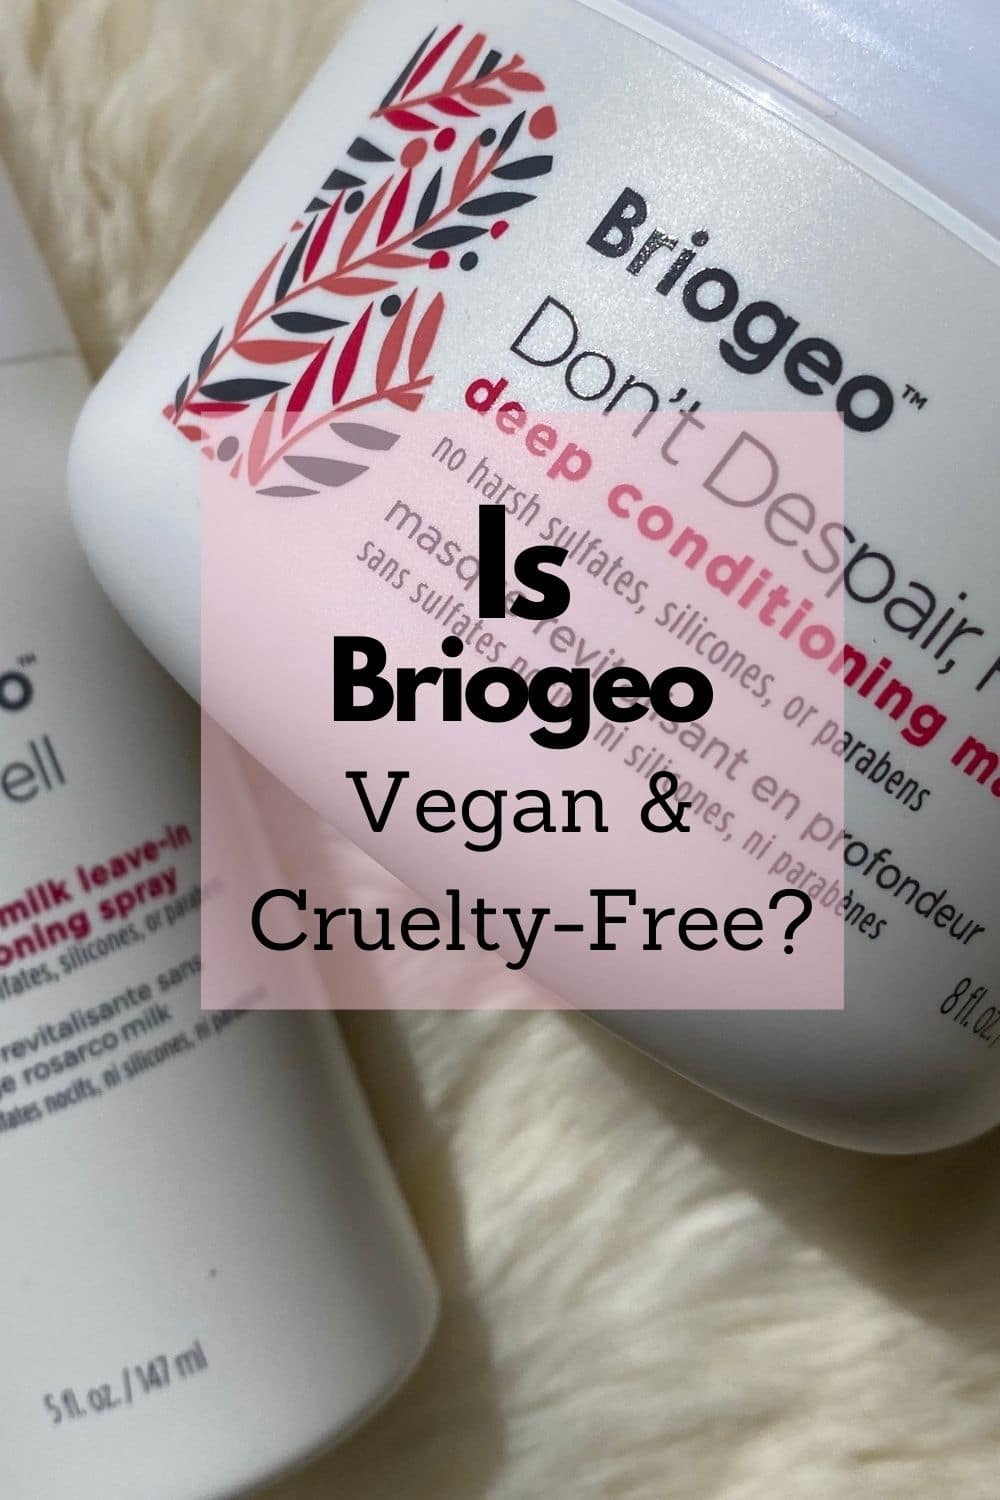 Briogeo Vegan Product List (Cruelty-Free)